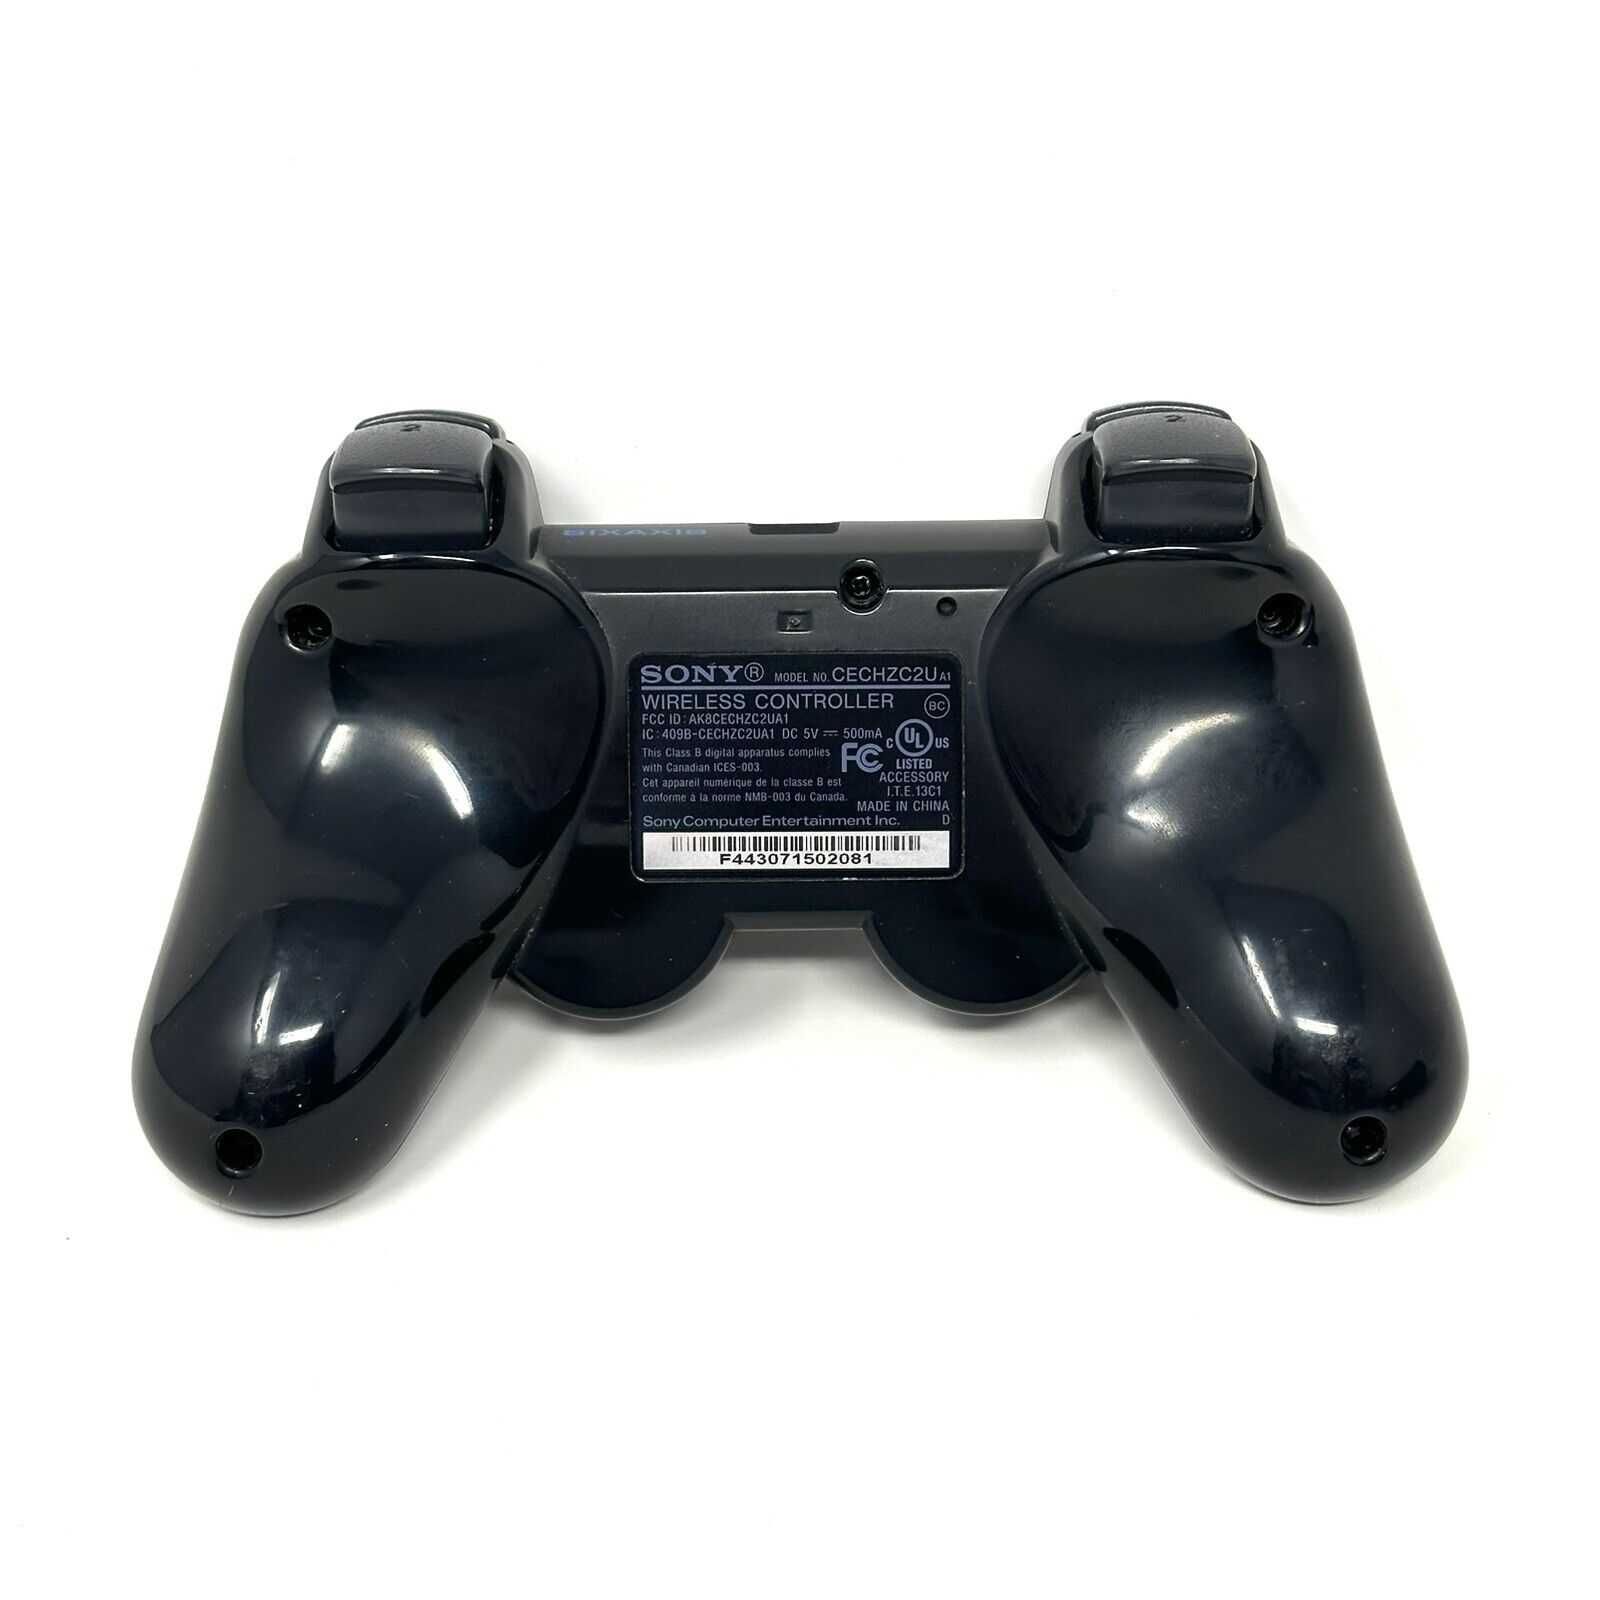 Sony PS3 Playstation 3 Super Slim